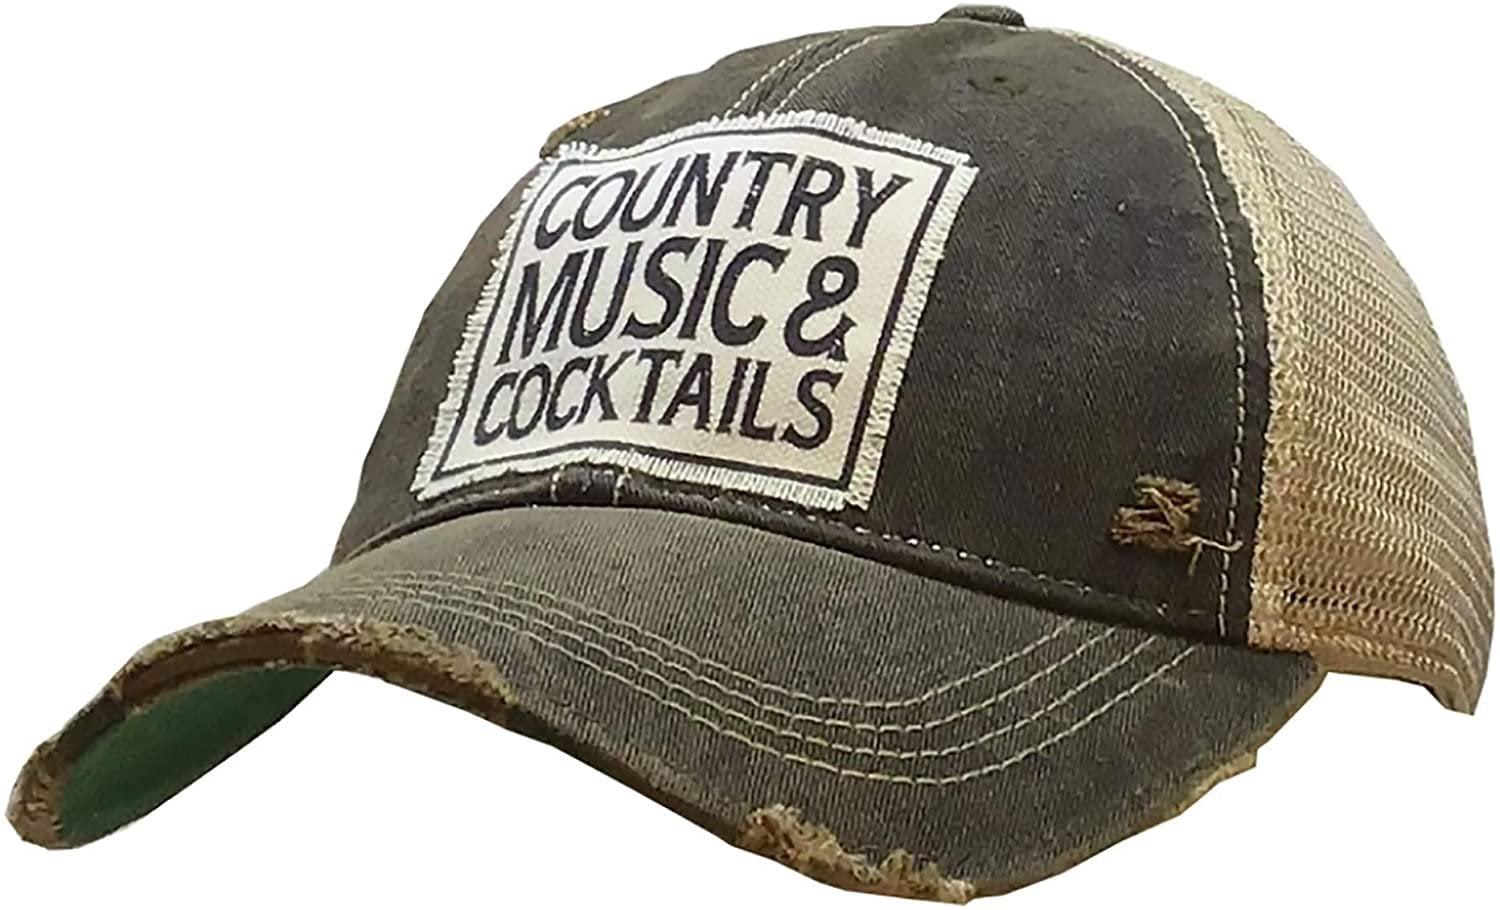 Music Notes Funny Designer Embroidered Vintage Hat Cap Snapback Weathered 